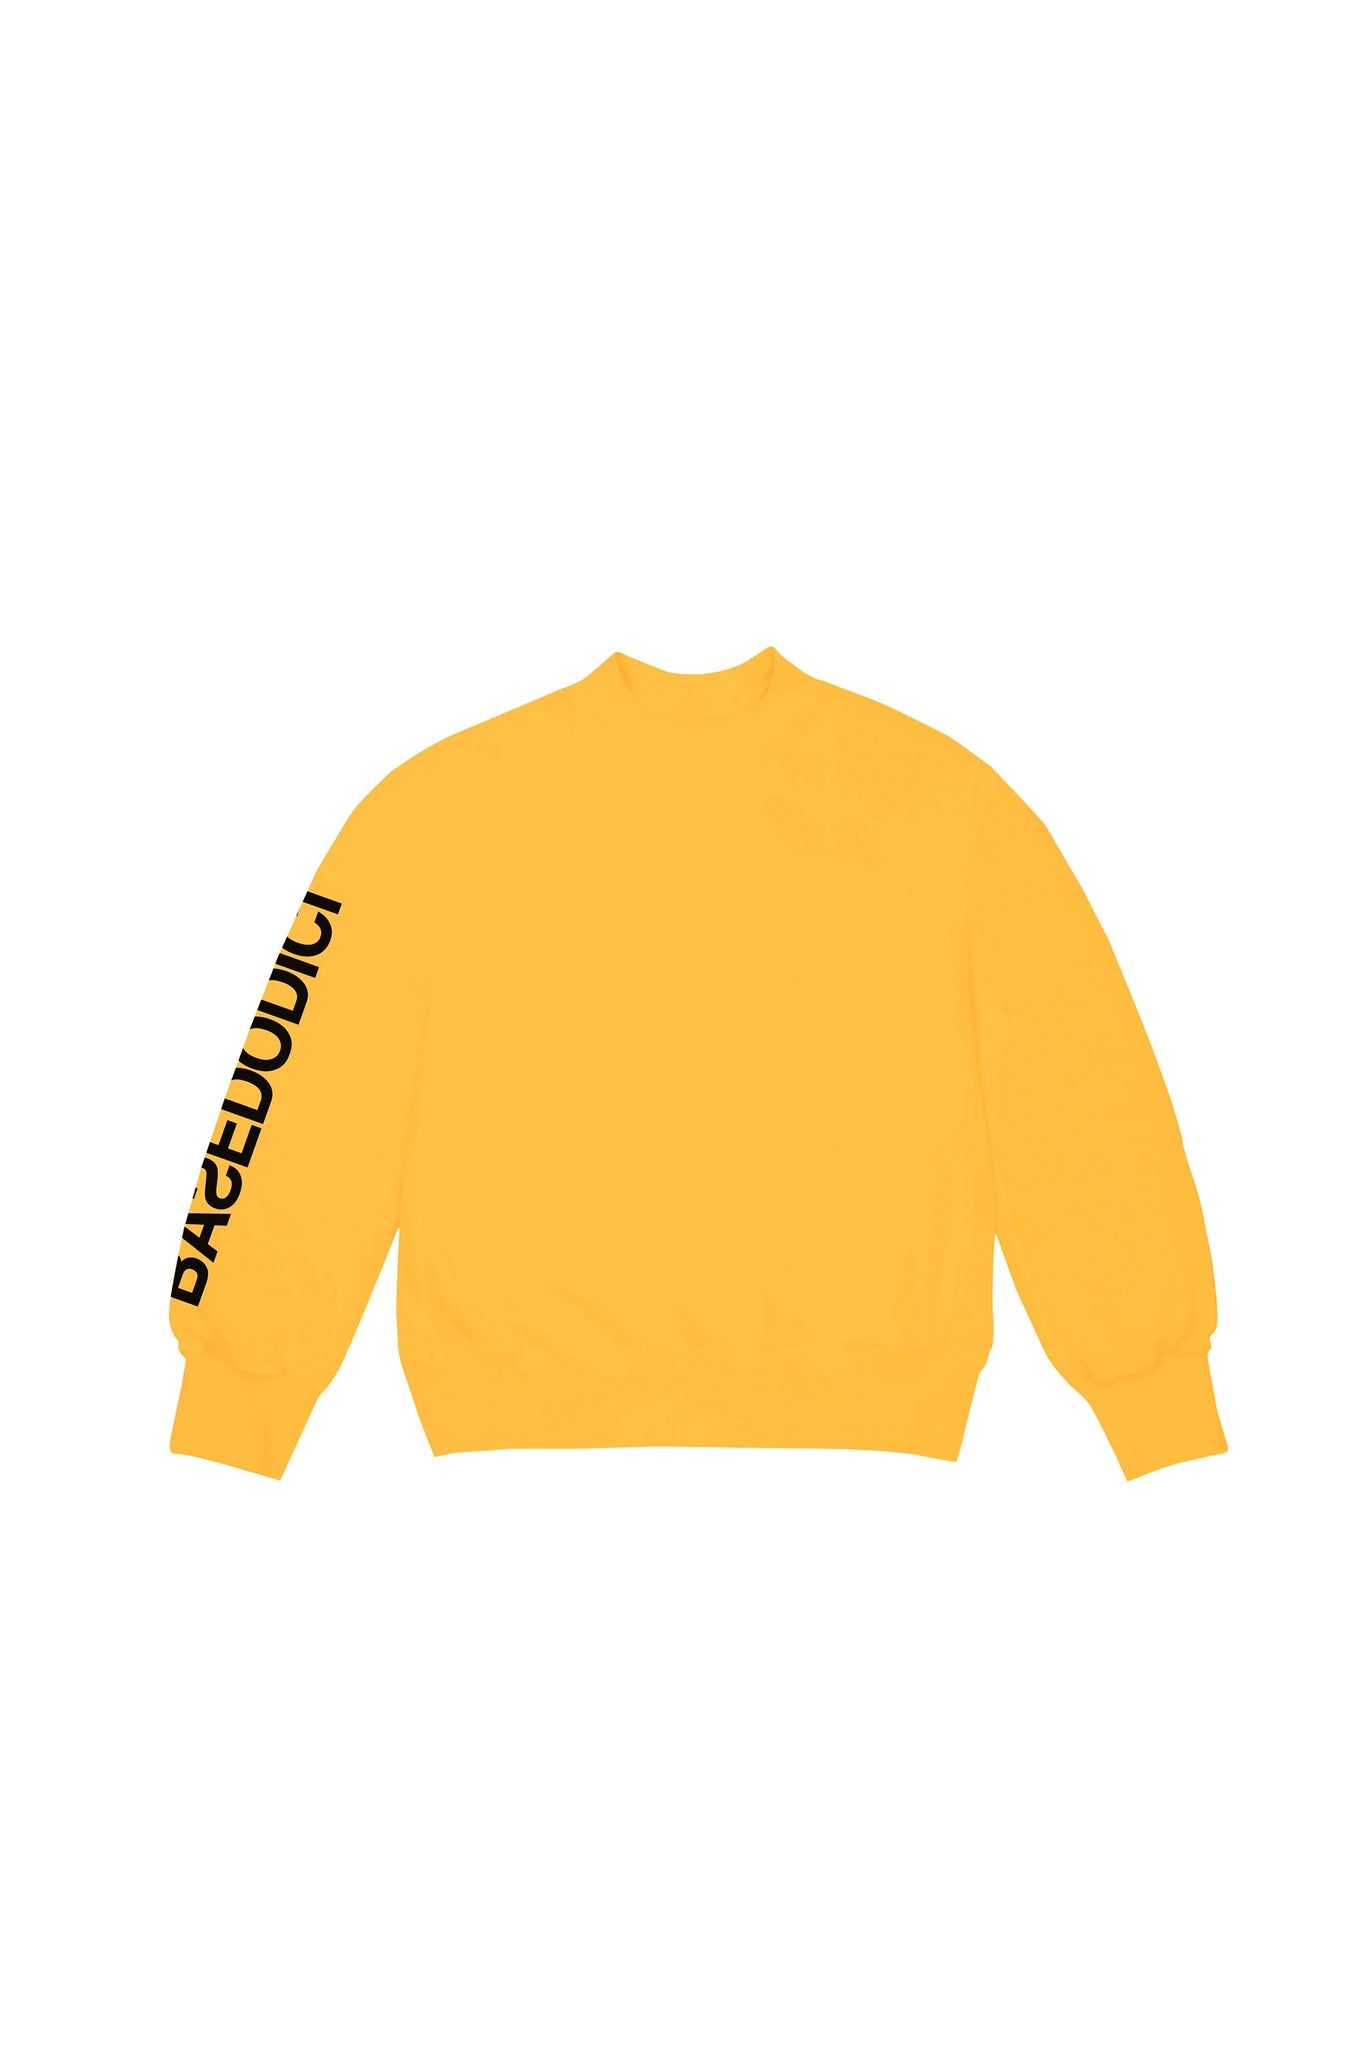 Crewneck “REVIVAL” Yellow